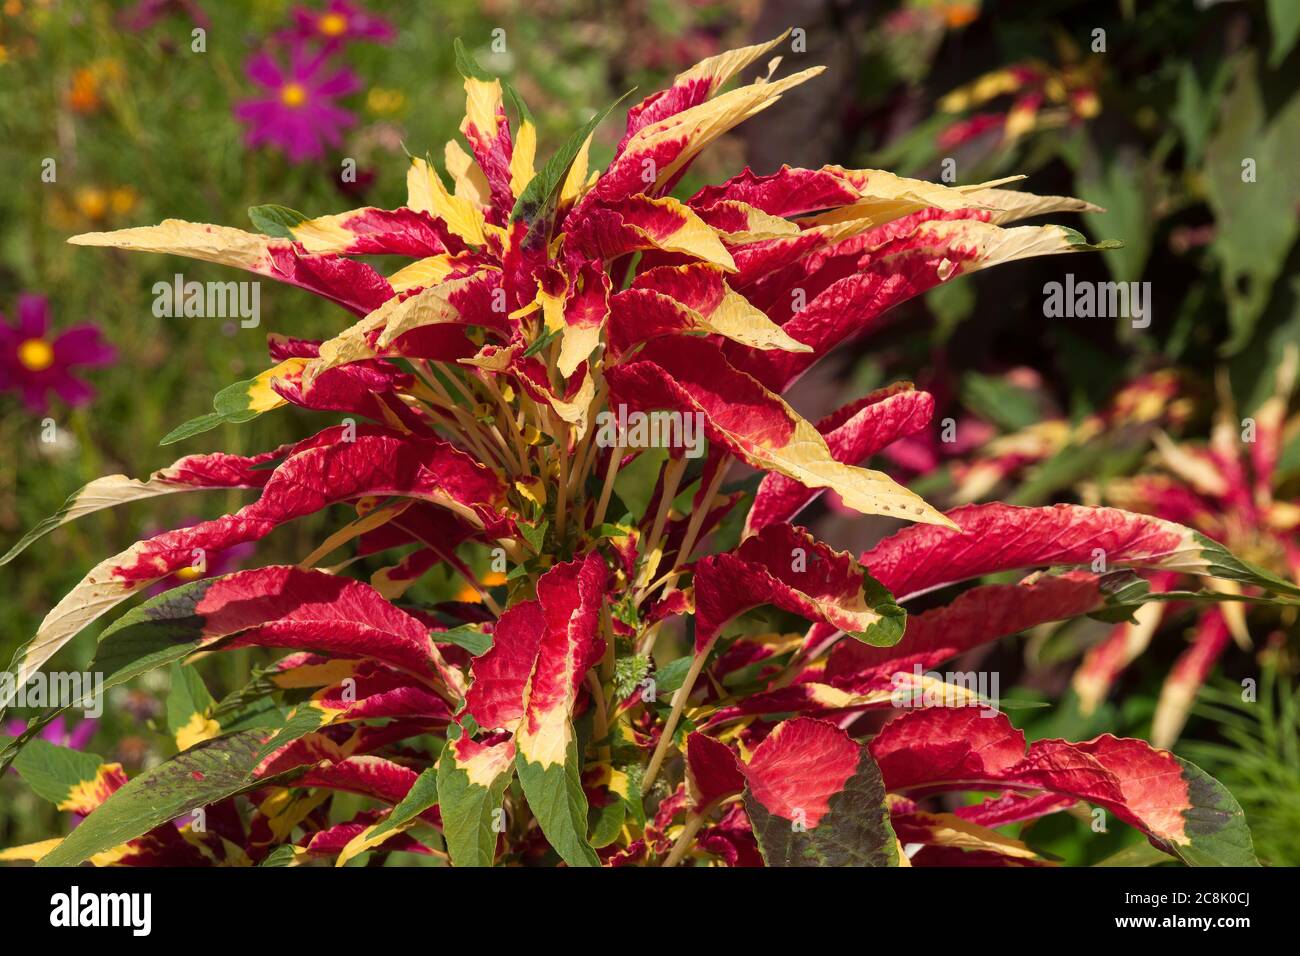 Sydney Australia, variegated leaves of a tricolor amaranthus plant Stock Photo